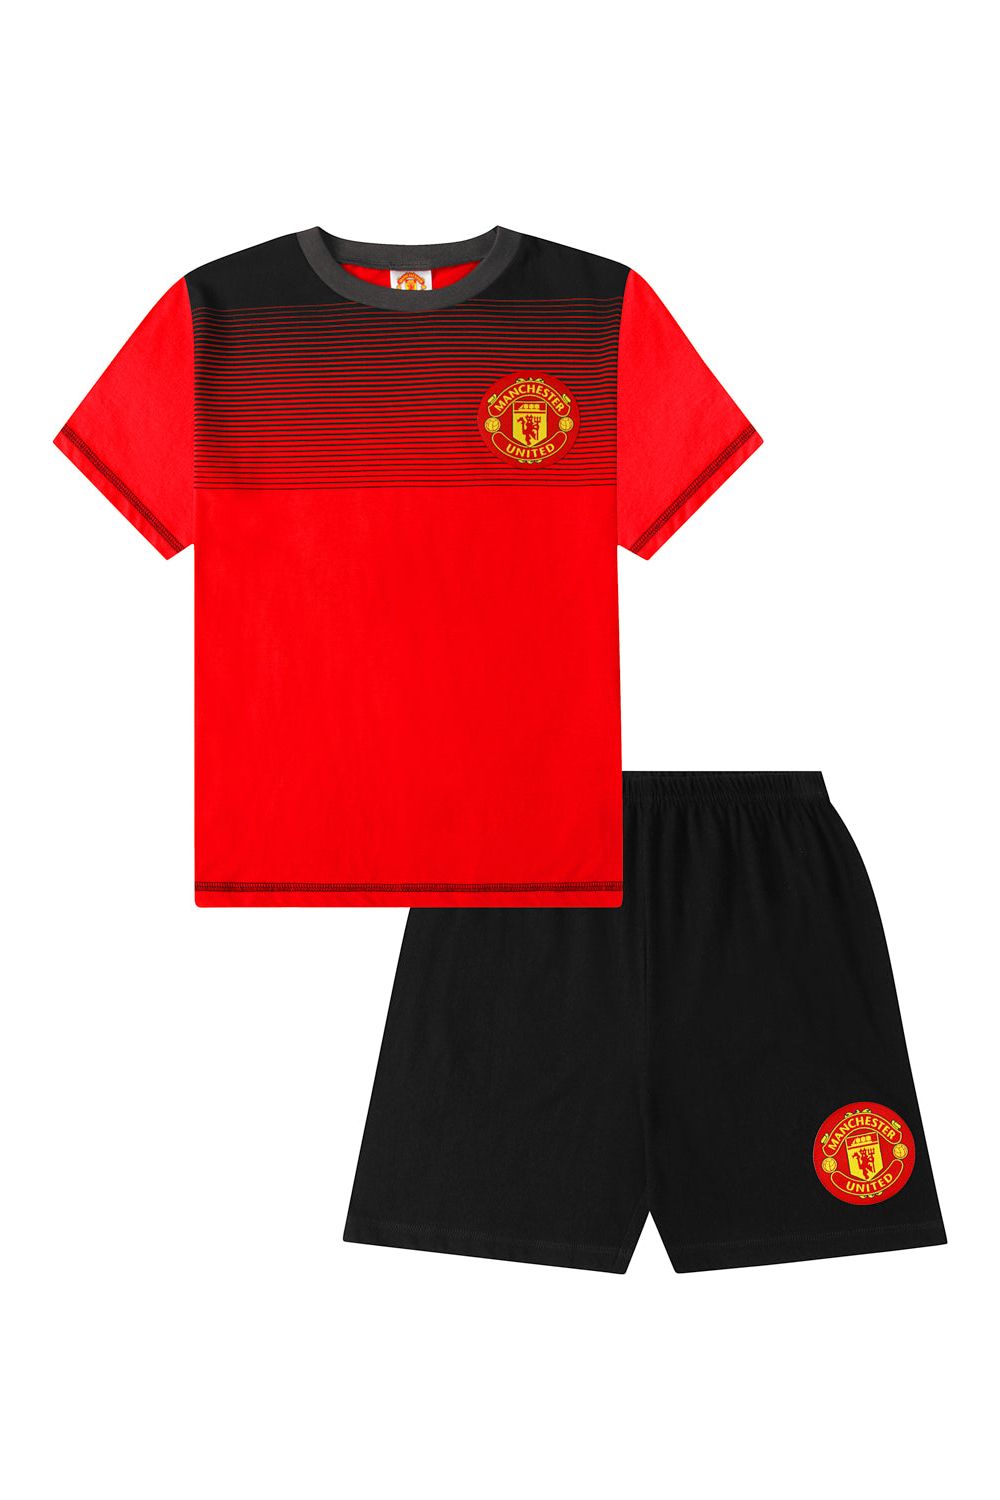 Manchester United  F.C Black Short Pyjamas - Pyjamas.com